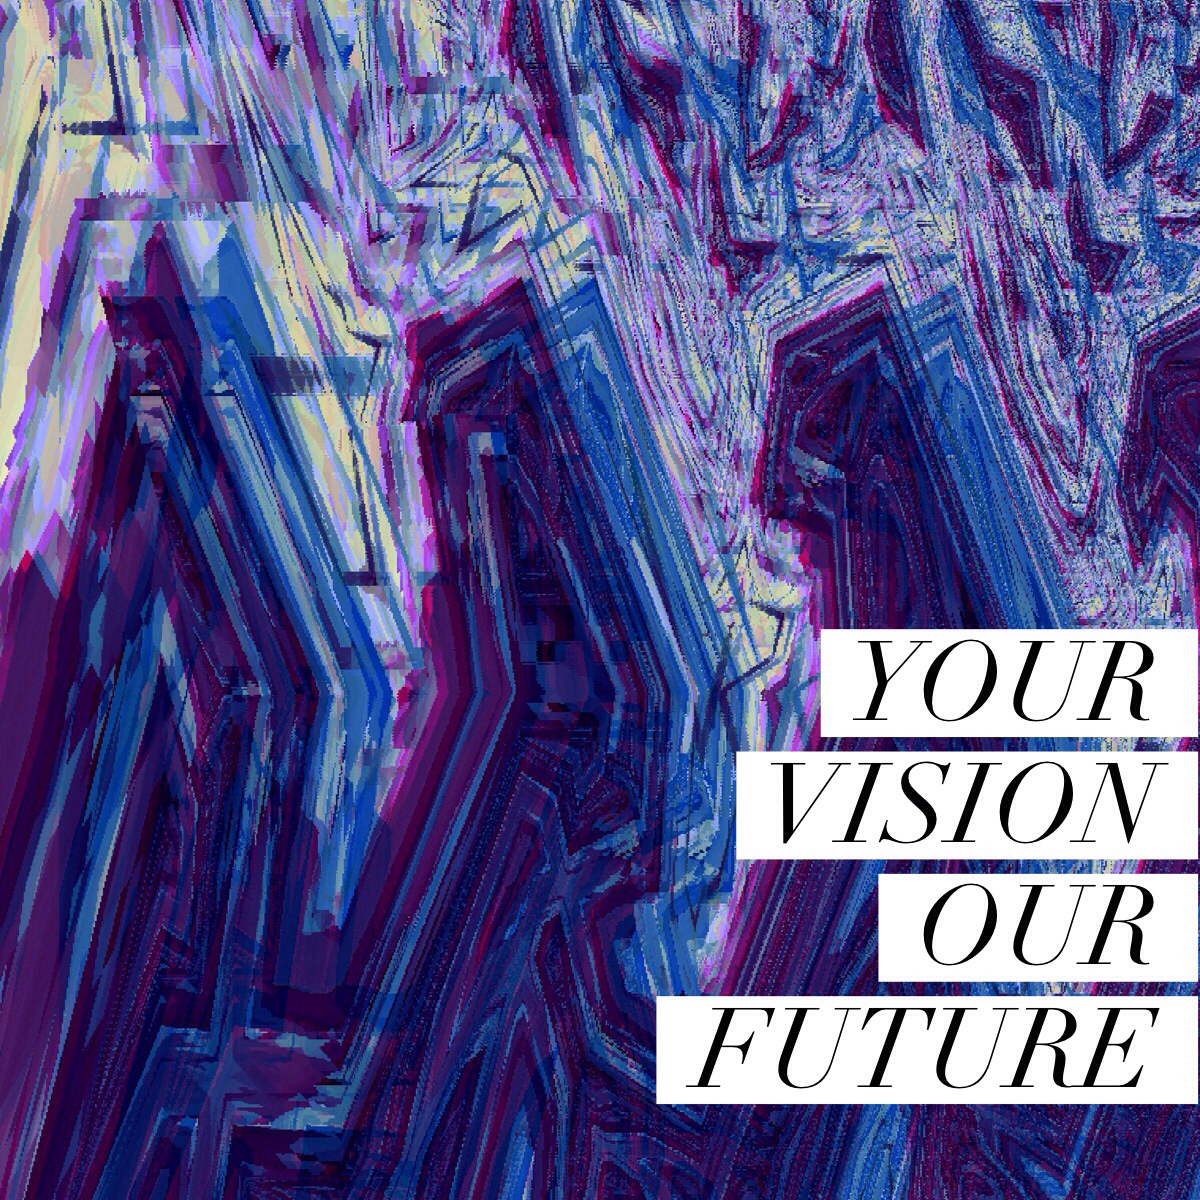 Future vision